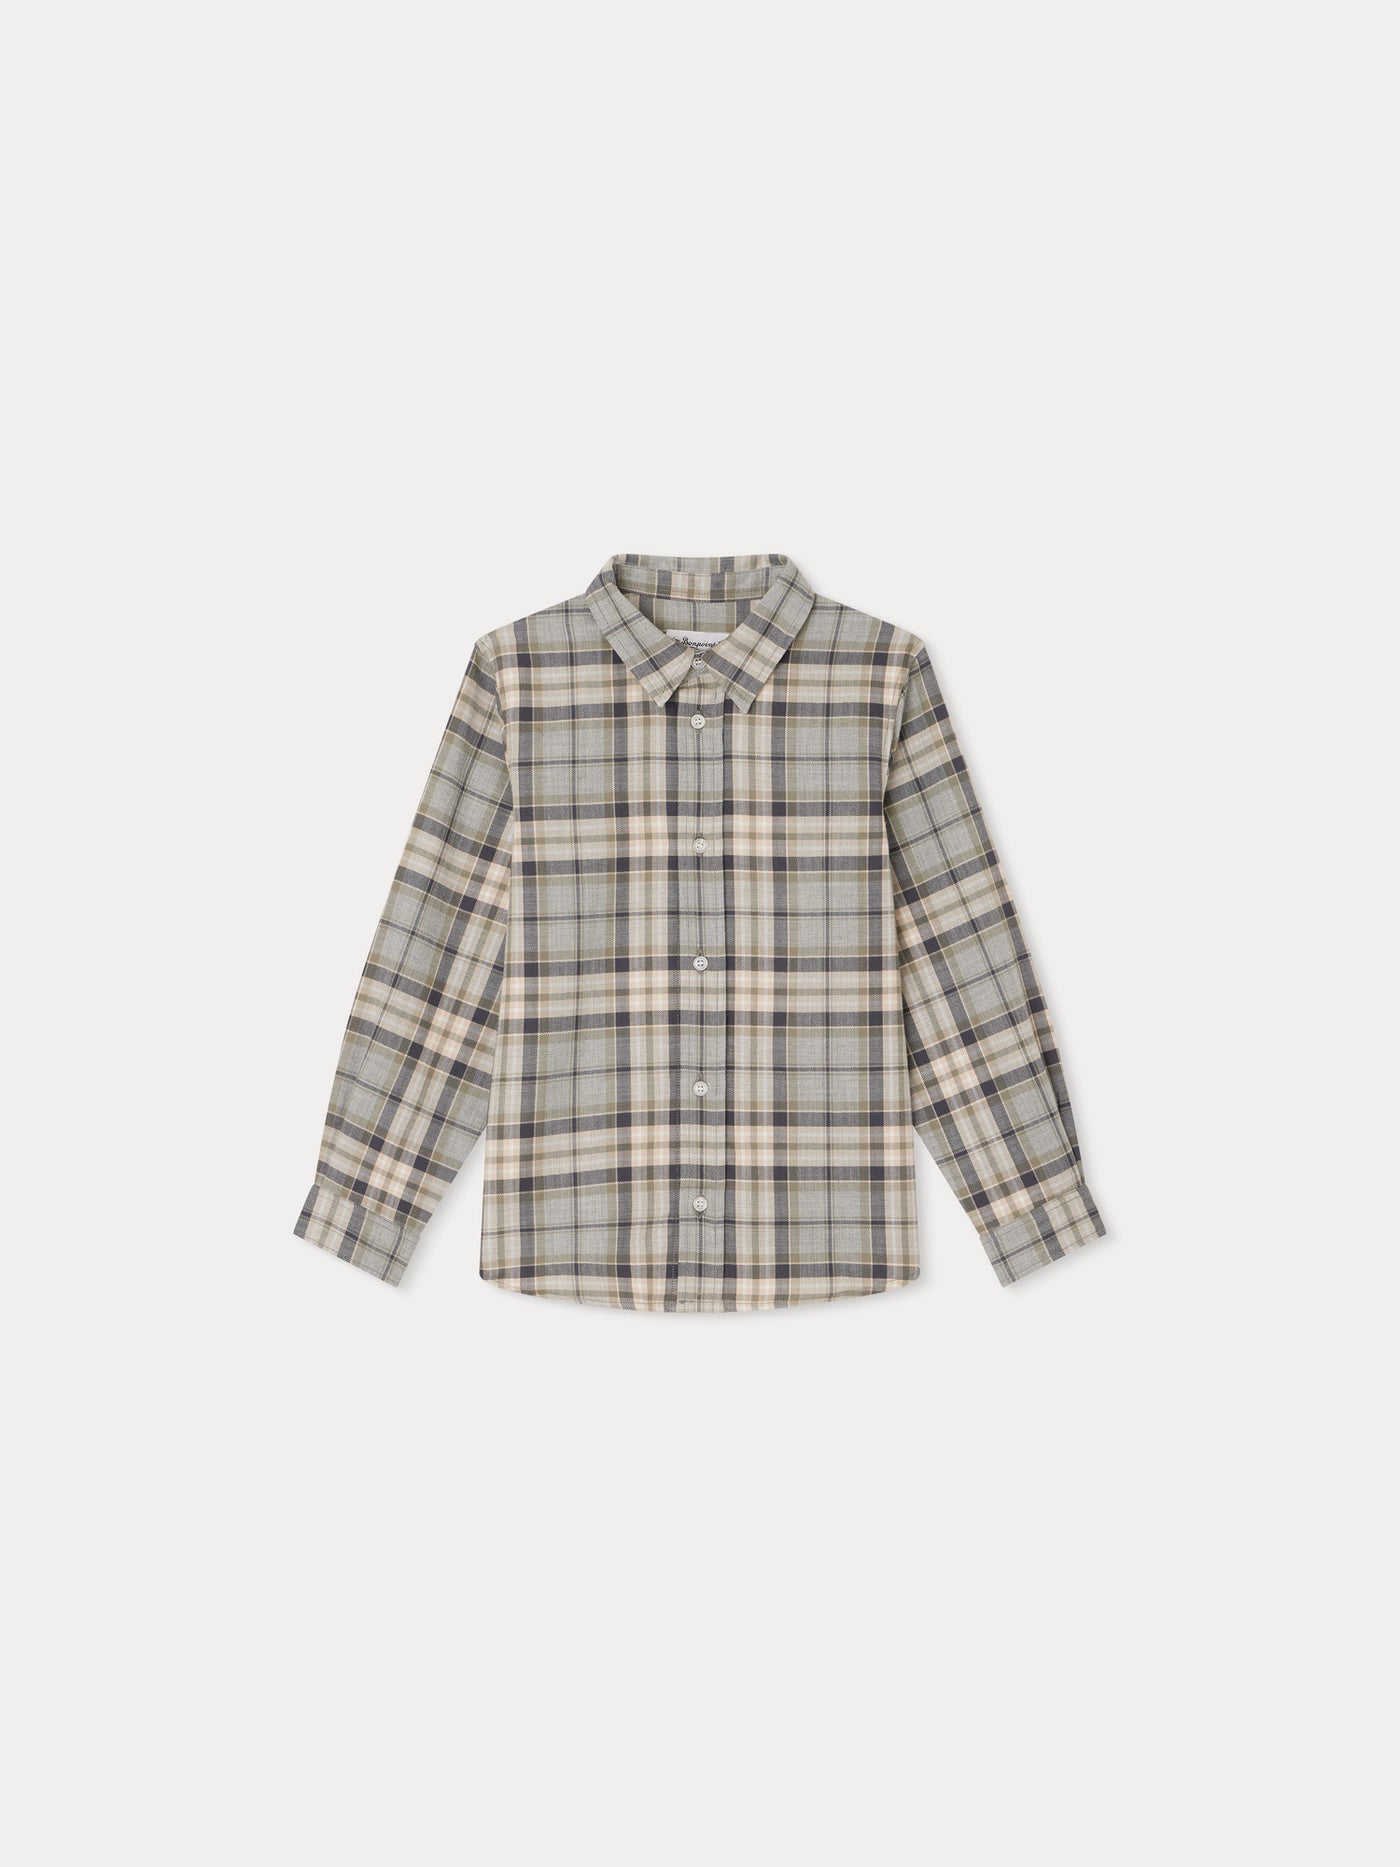 Daho Shirt heathered gray